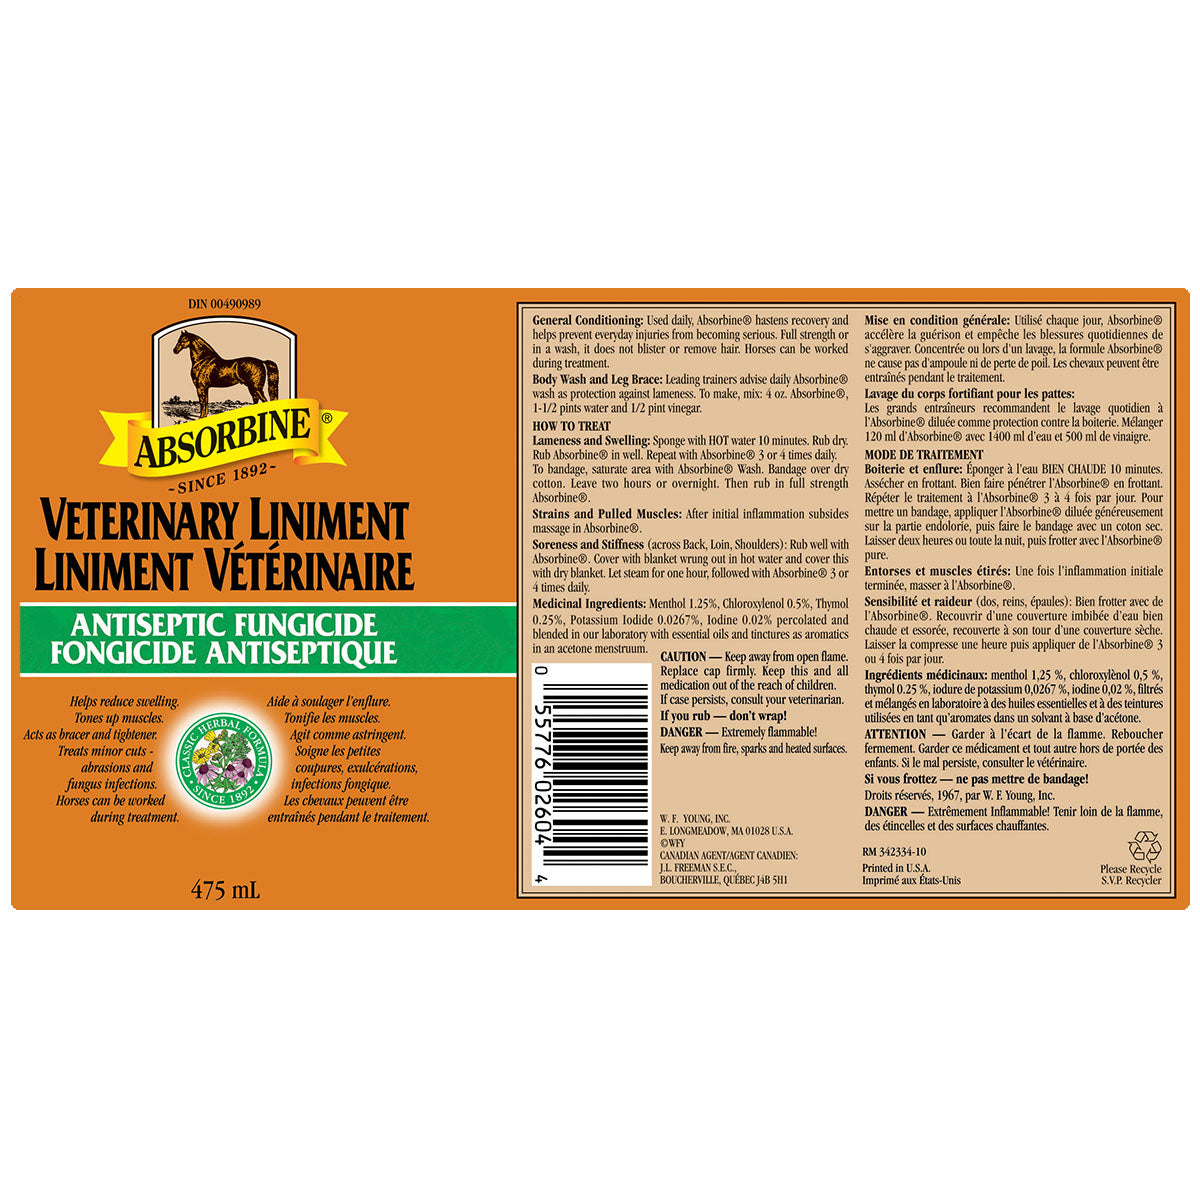 Absorbine Veterinary Liniment 475 ml back label.